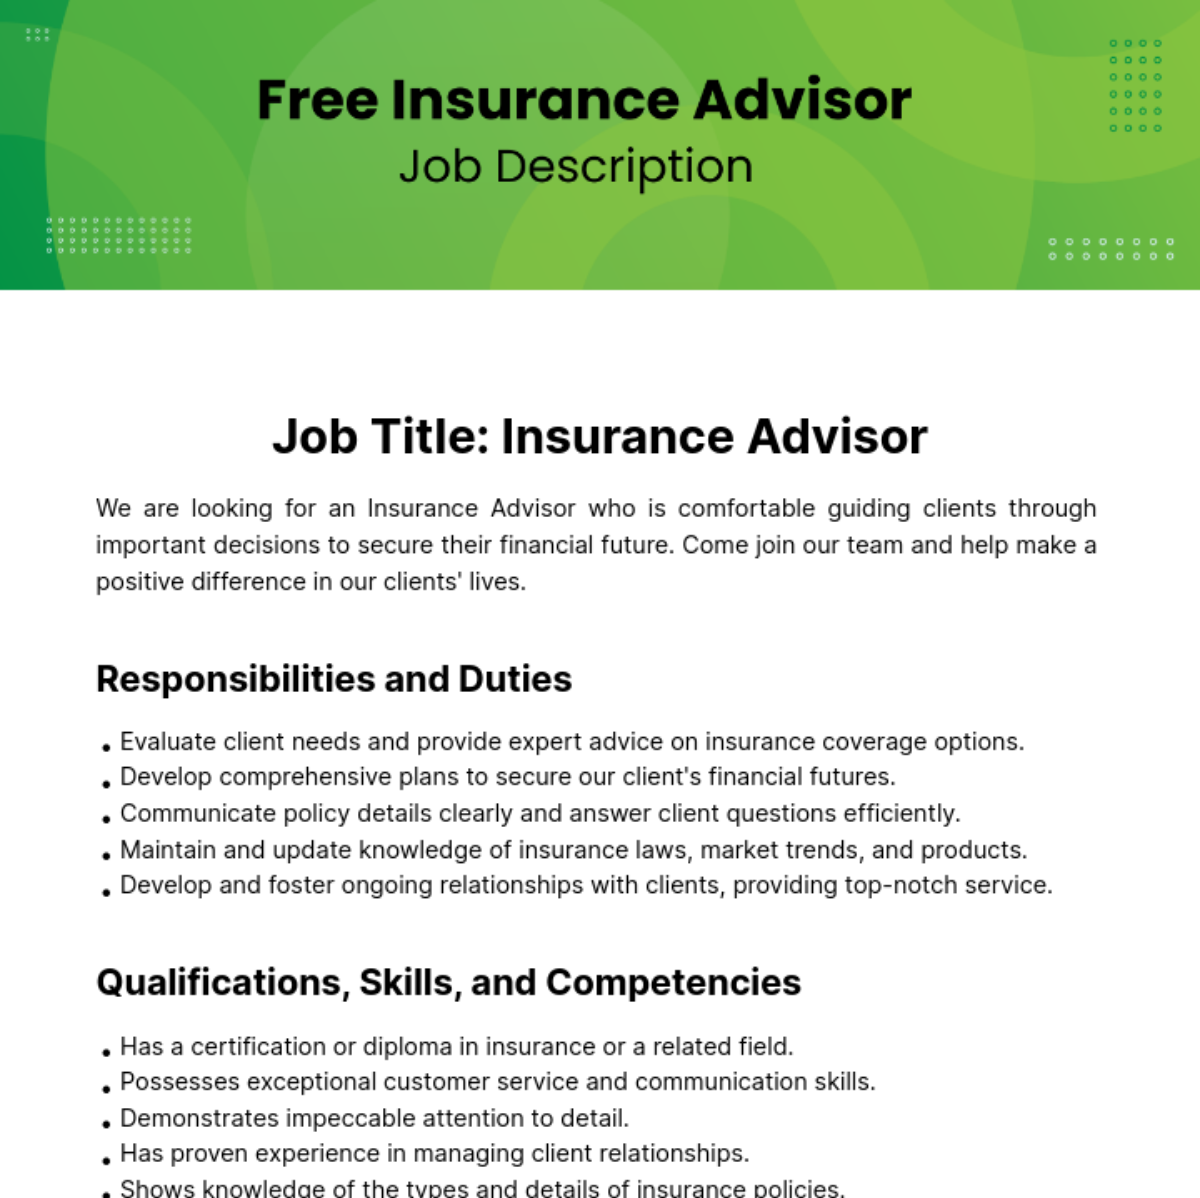 Free Insurance Advisor Job Description Template